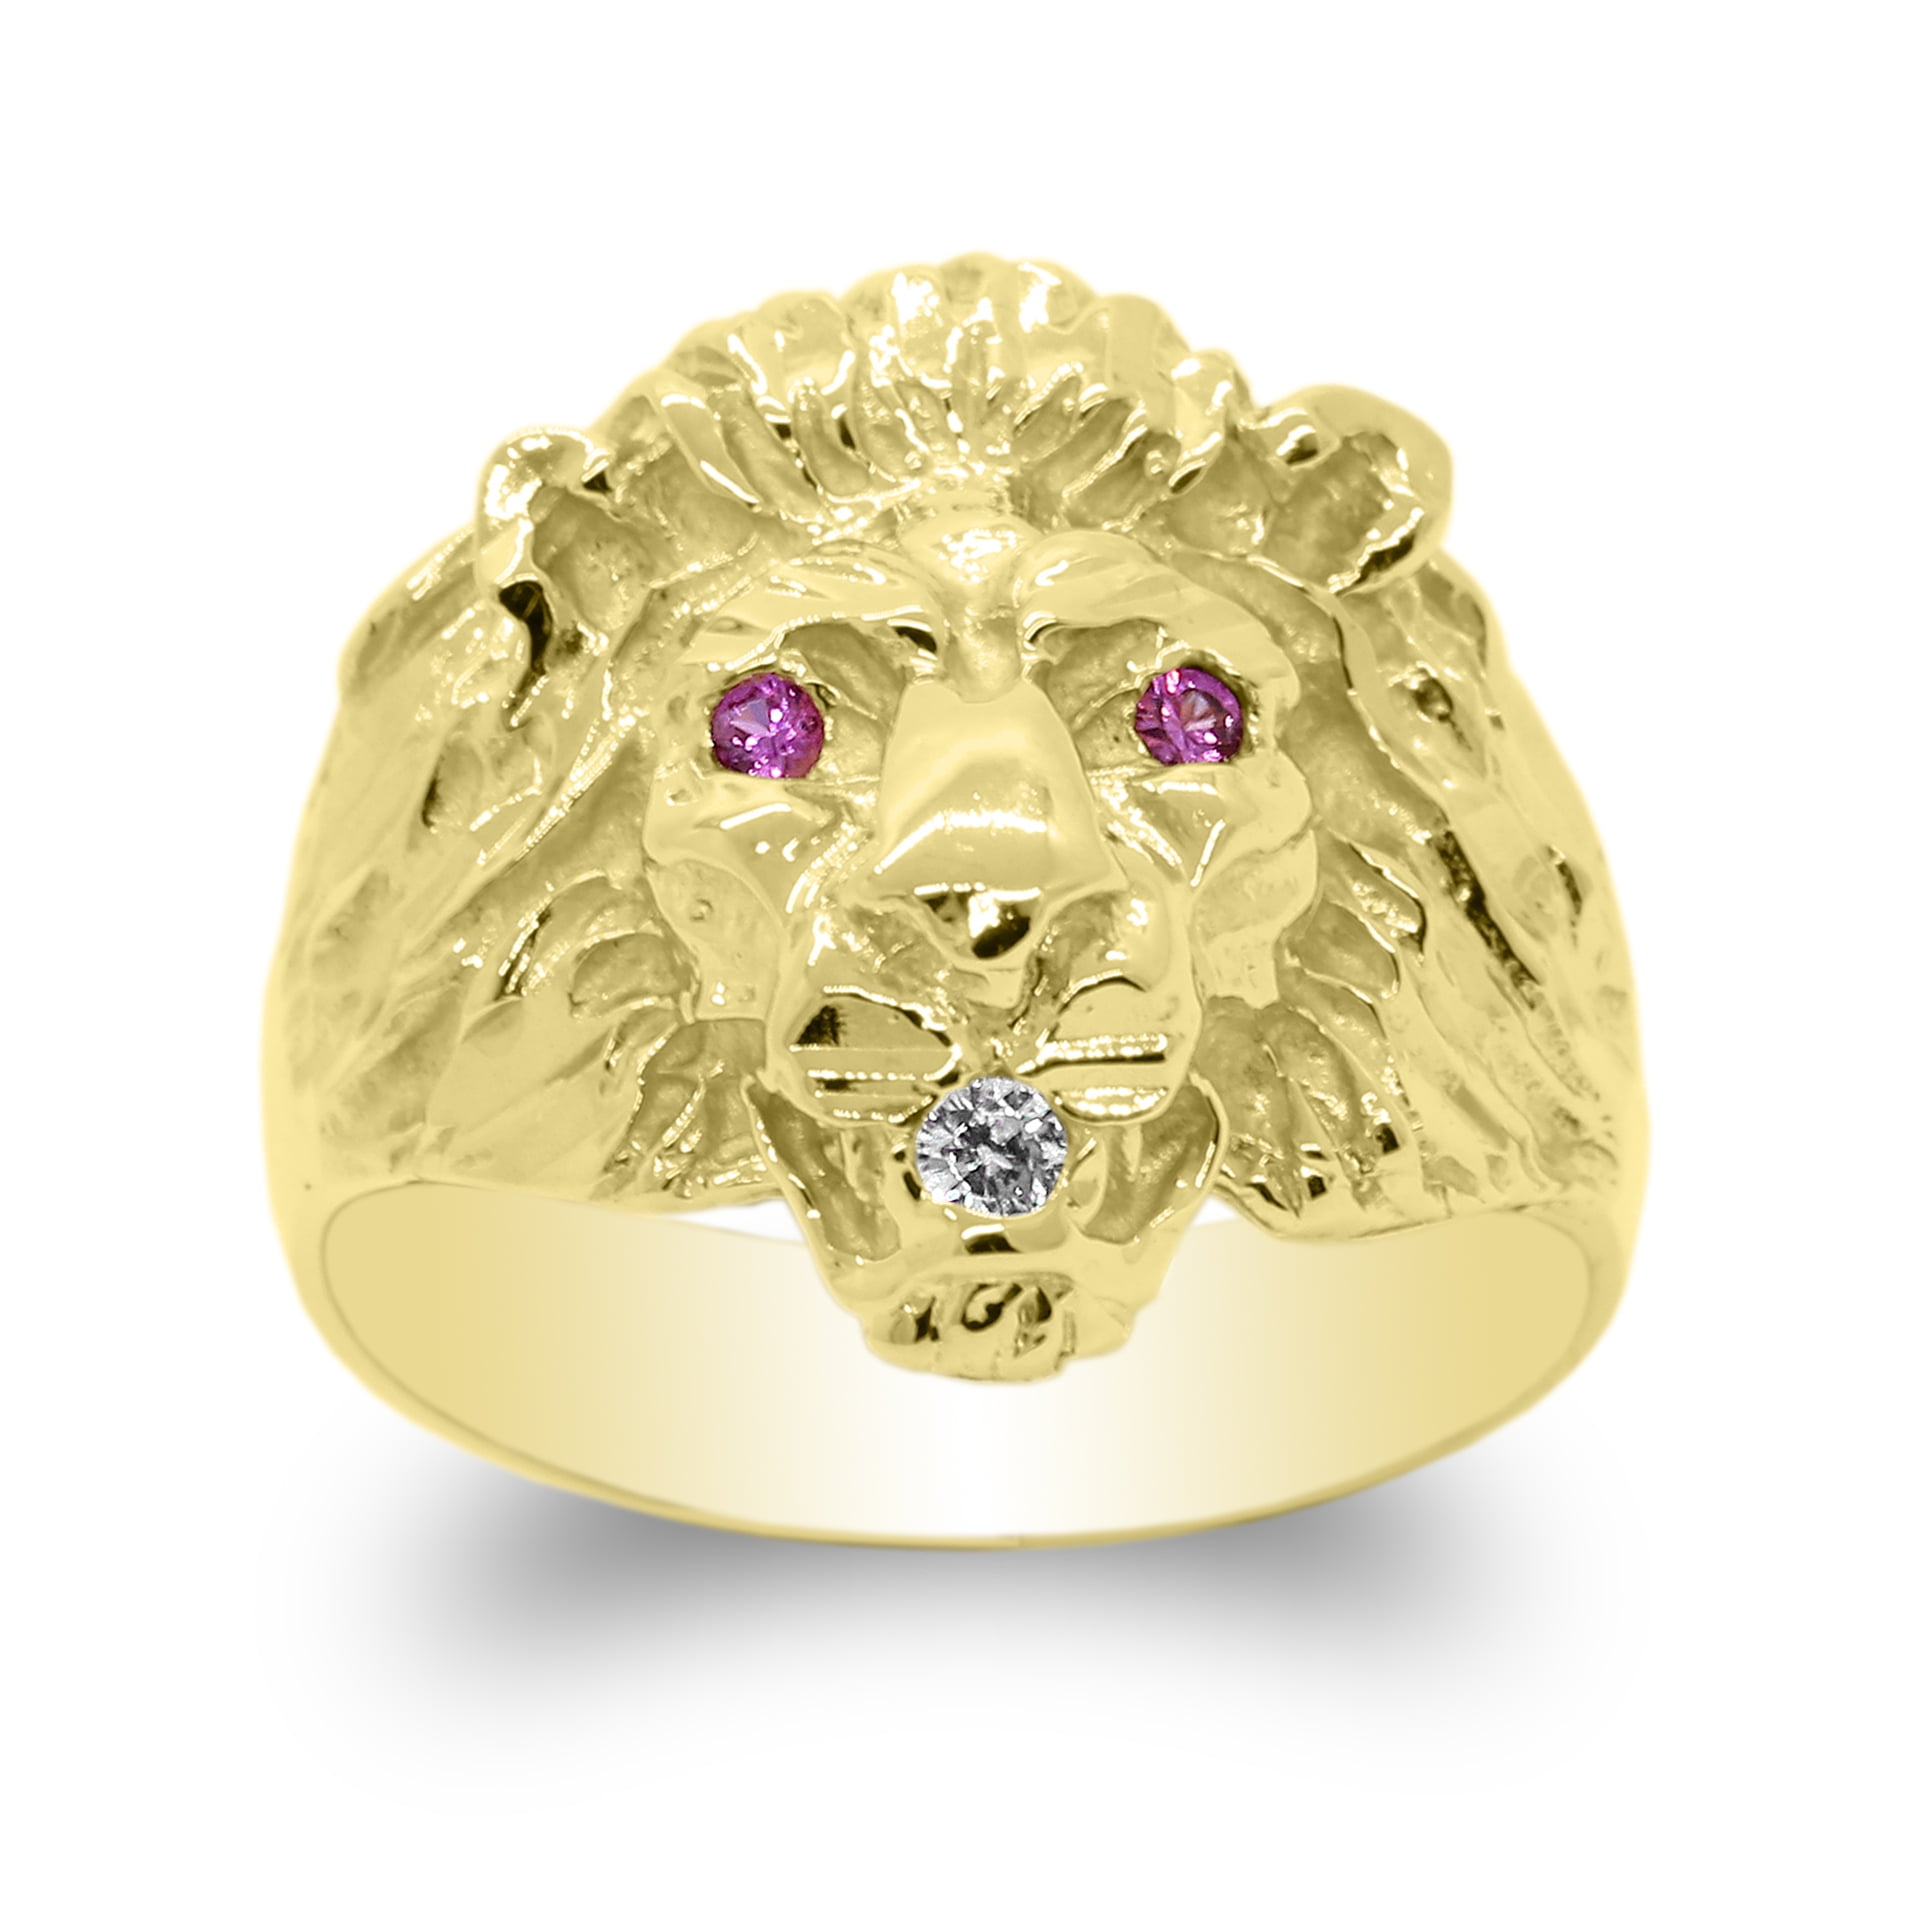 Men's Lion Face Ring 10K Yellow Gold Lion Ring Size 8